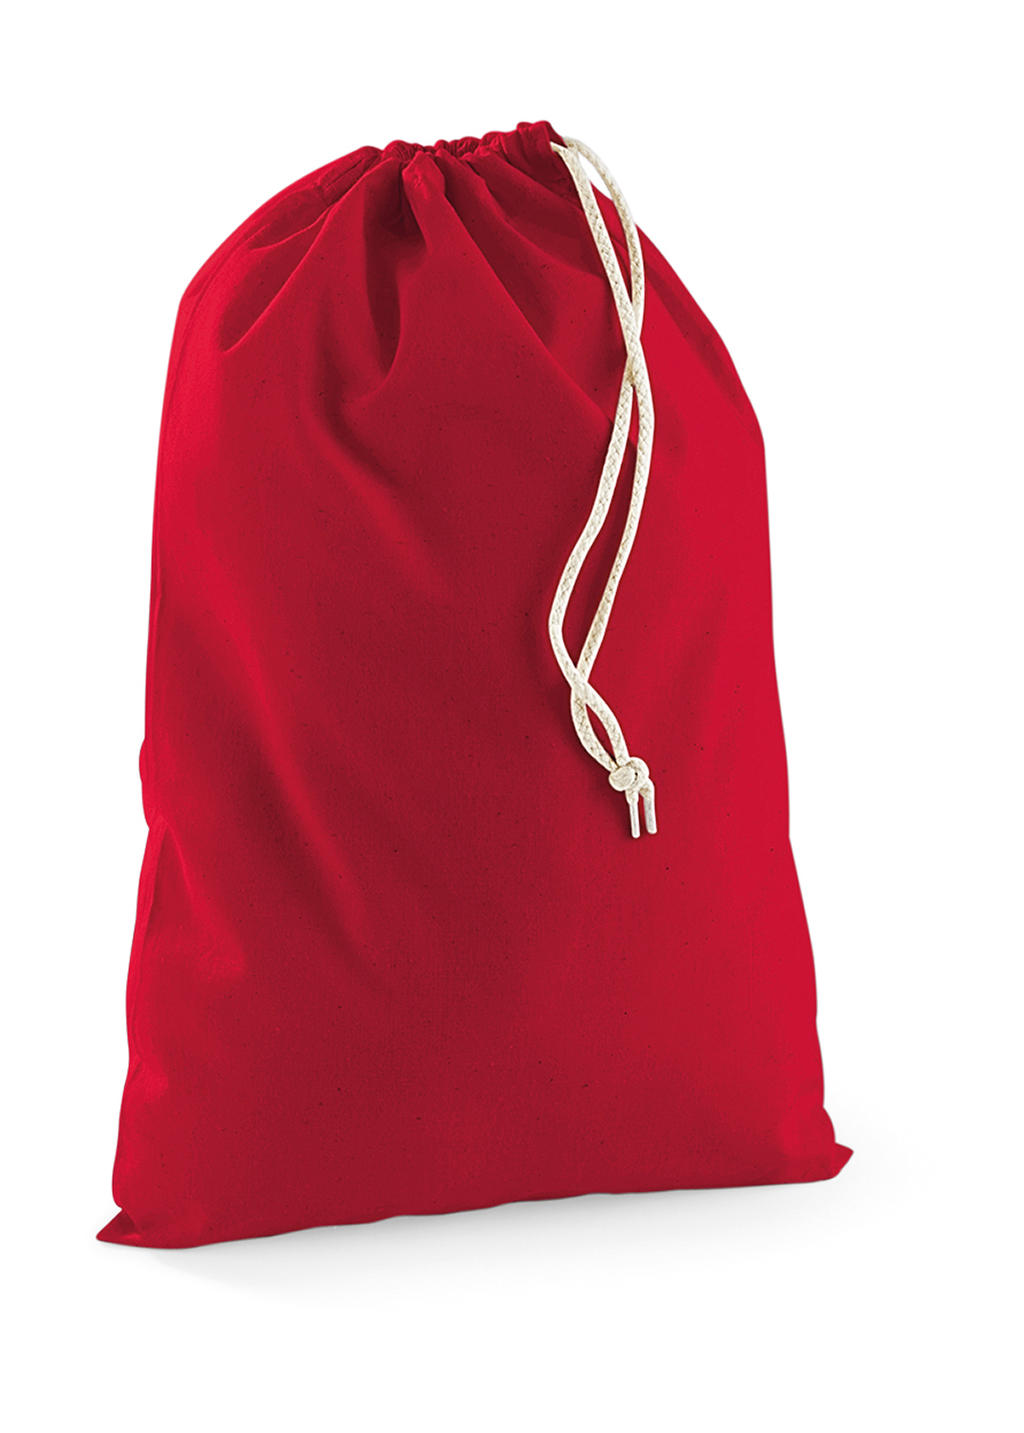  Cotton Stuff Bag in Farbe Classic Red